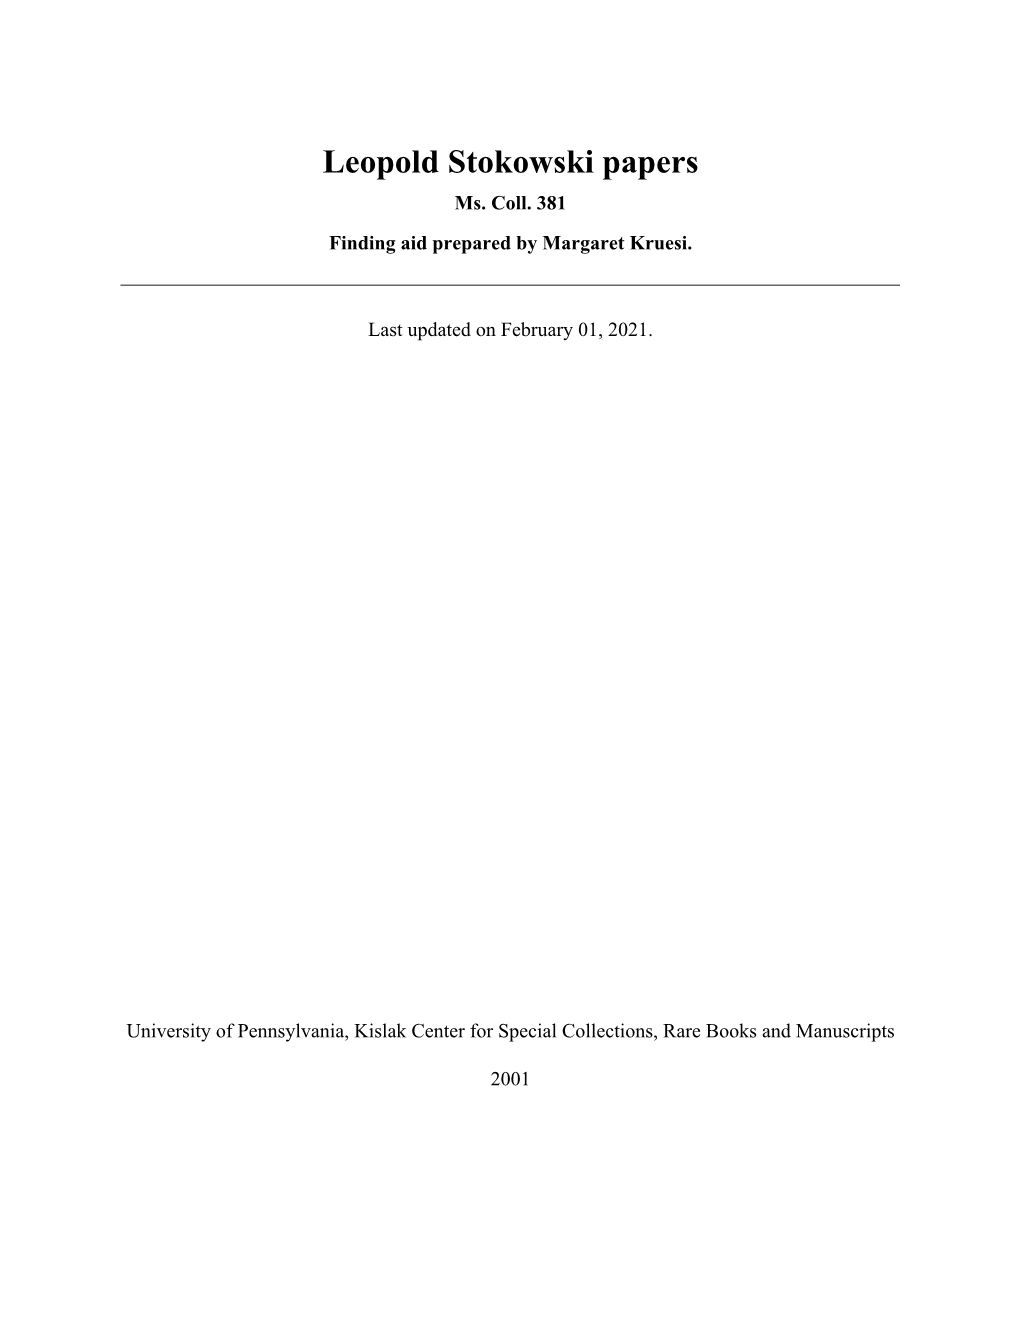 Leopold Stokowski Papers Ms